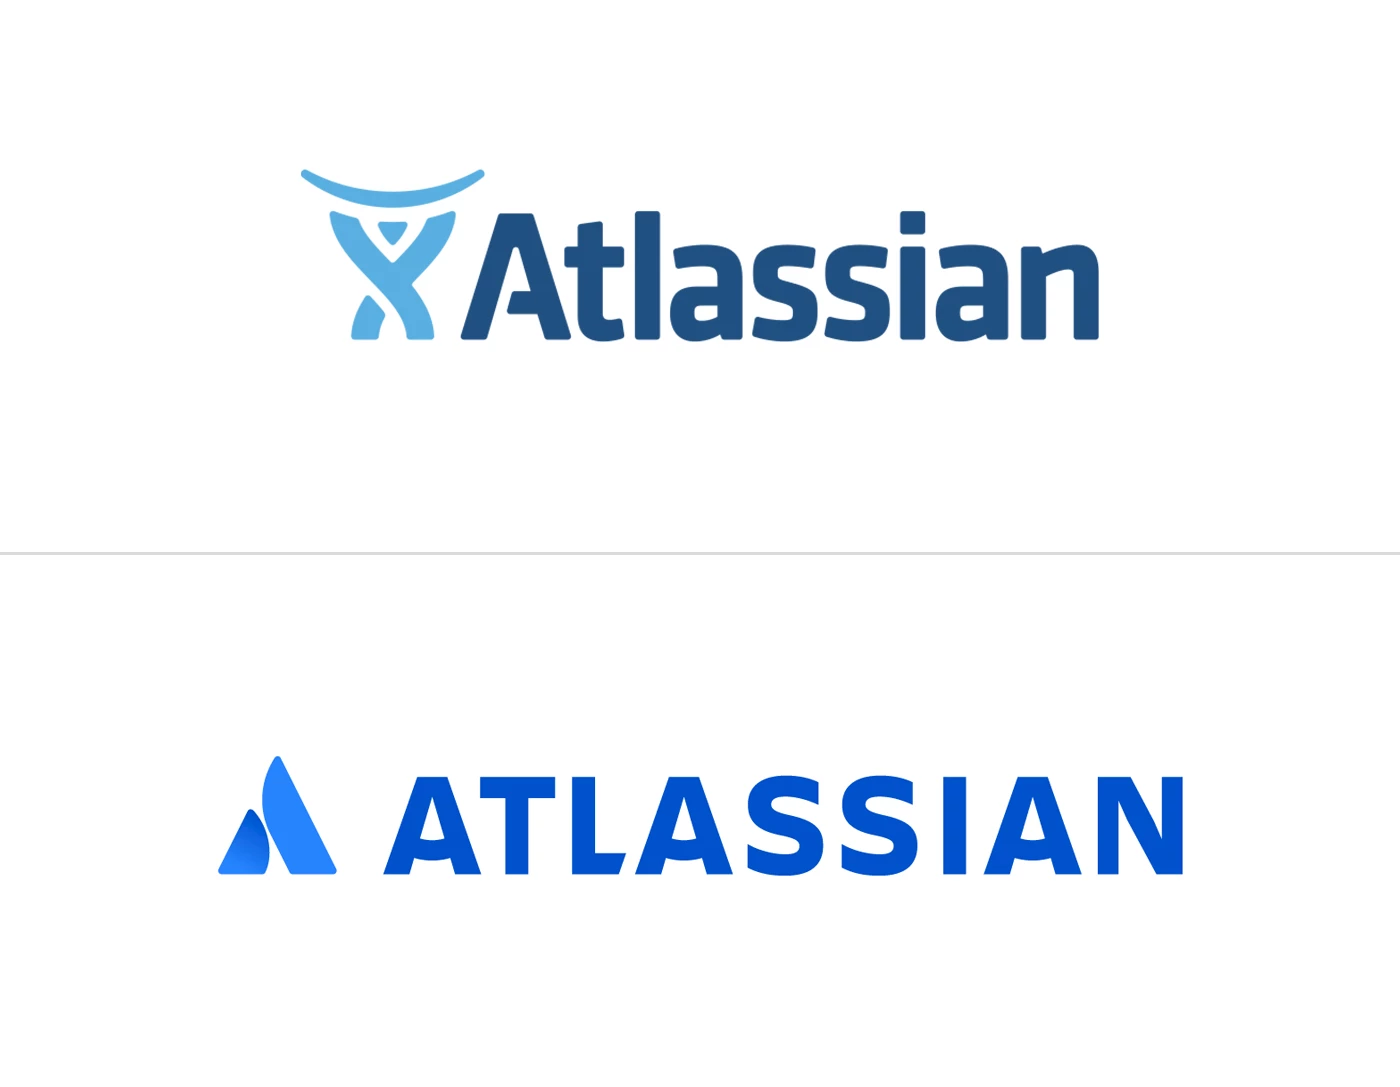 Atlassian revamps its image